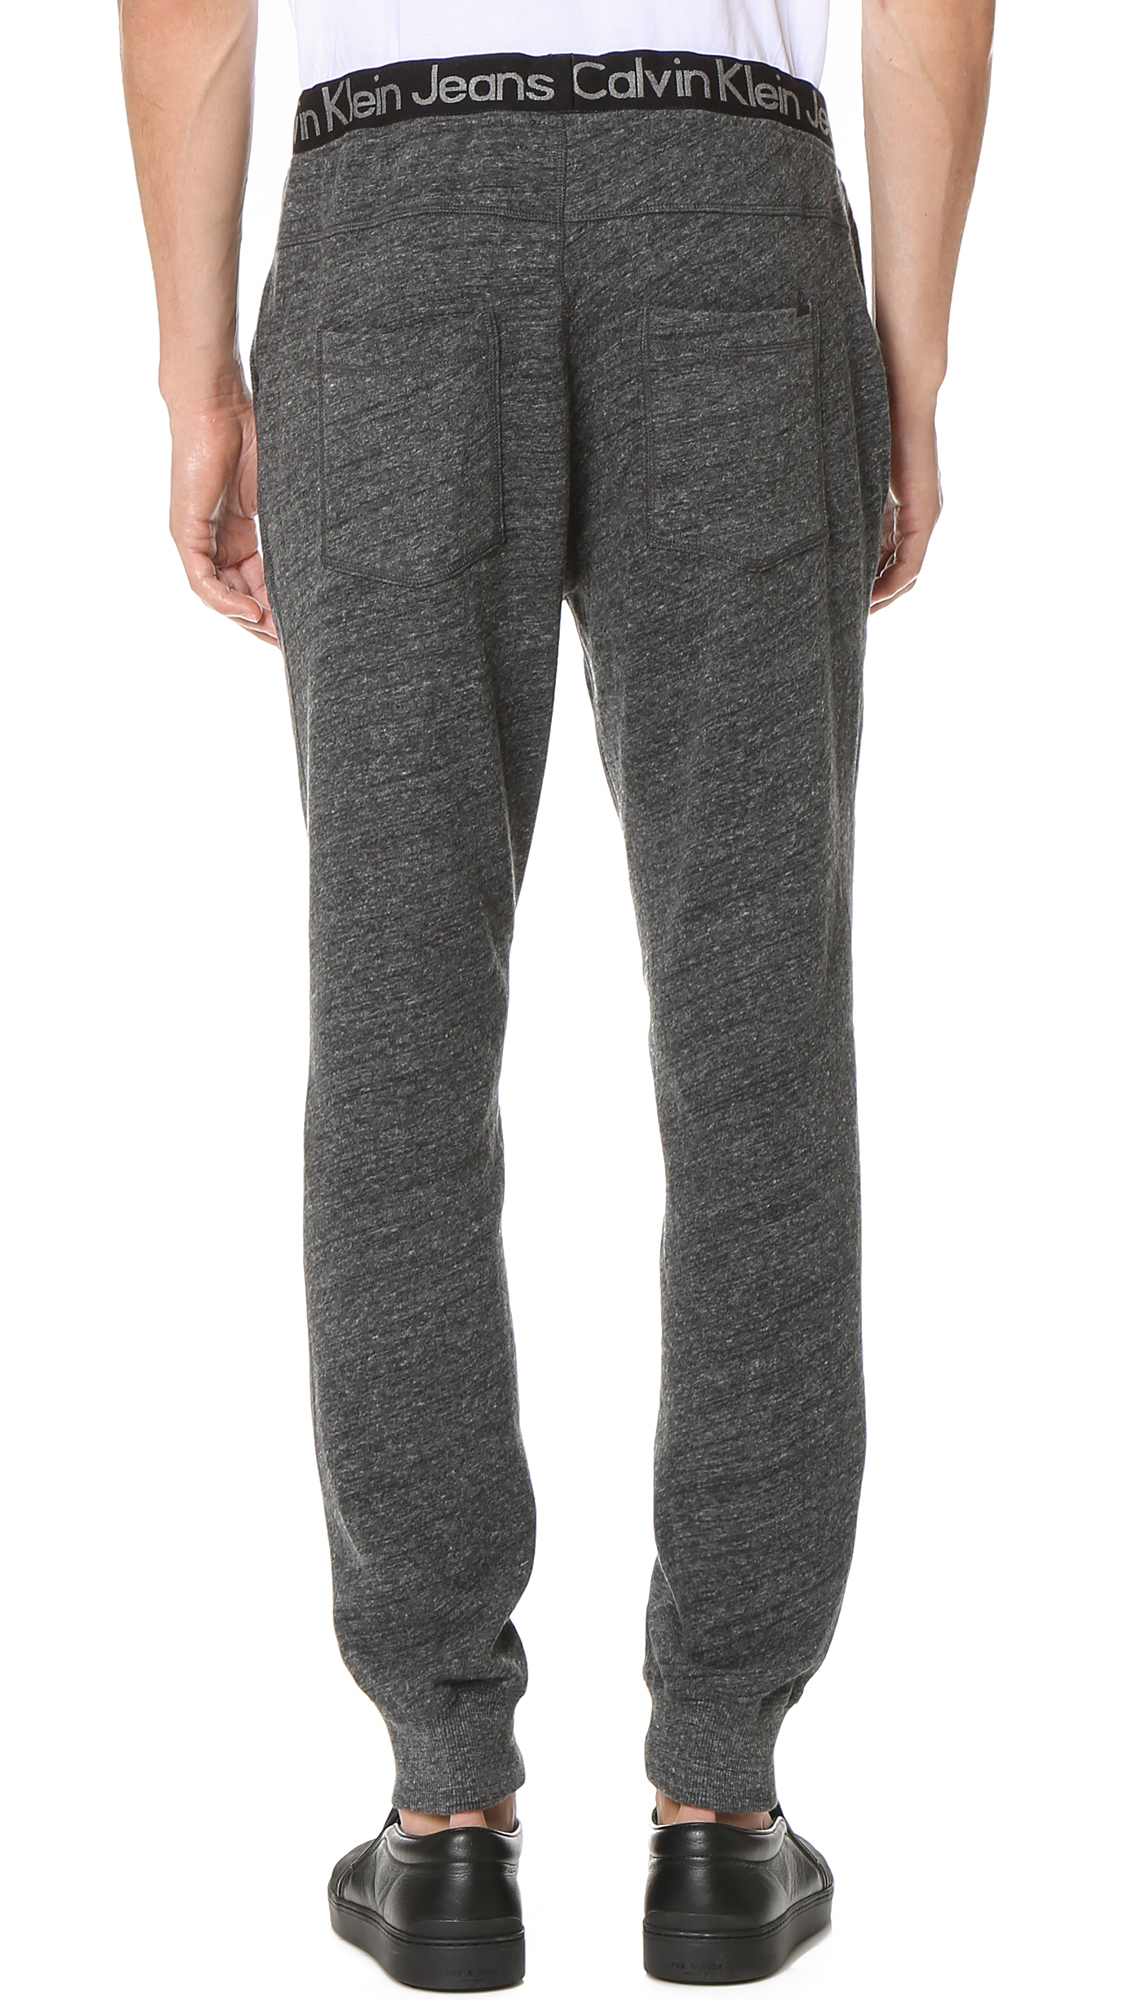 Calvin Klein Logo Waistband Sweatpants in Gray for Men - Lyst